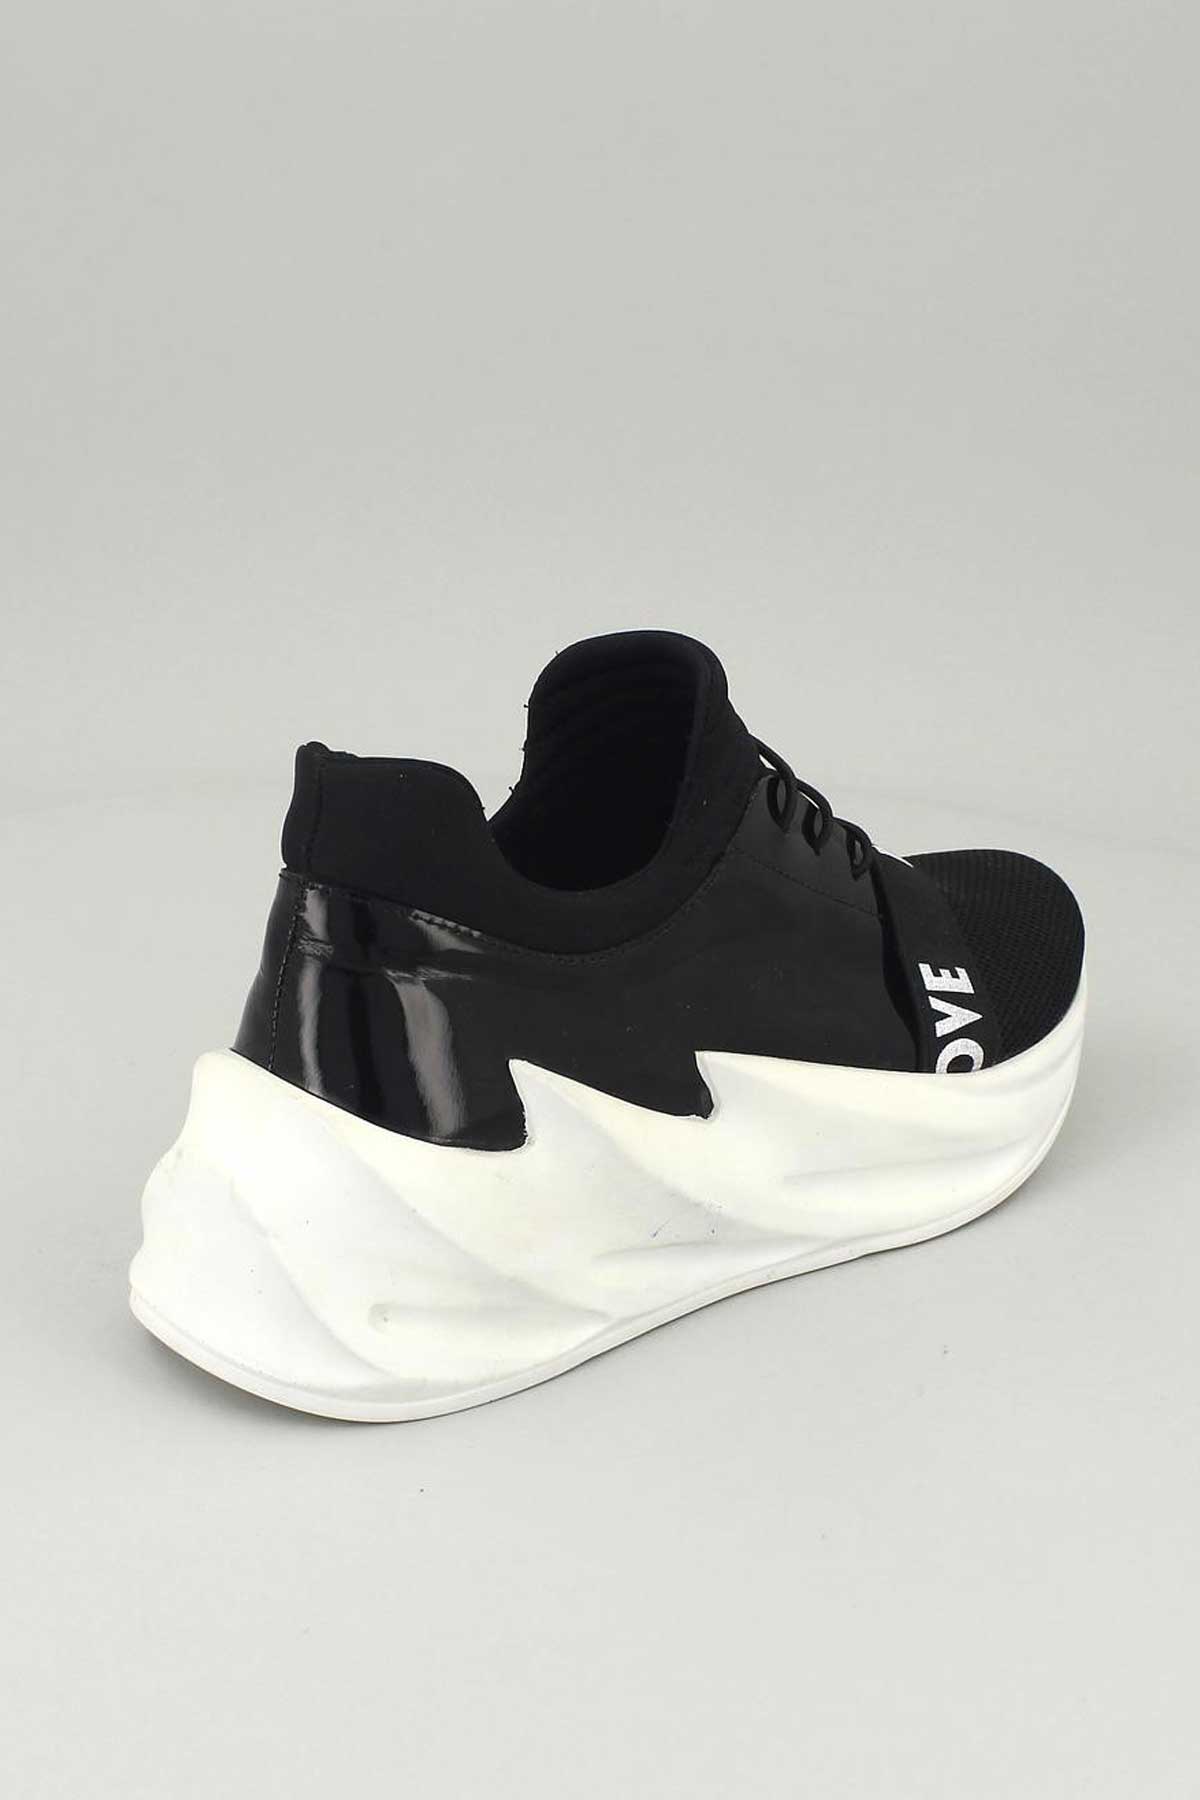 Kadın Deri Sneakers Siyah 13791Y